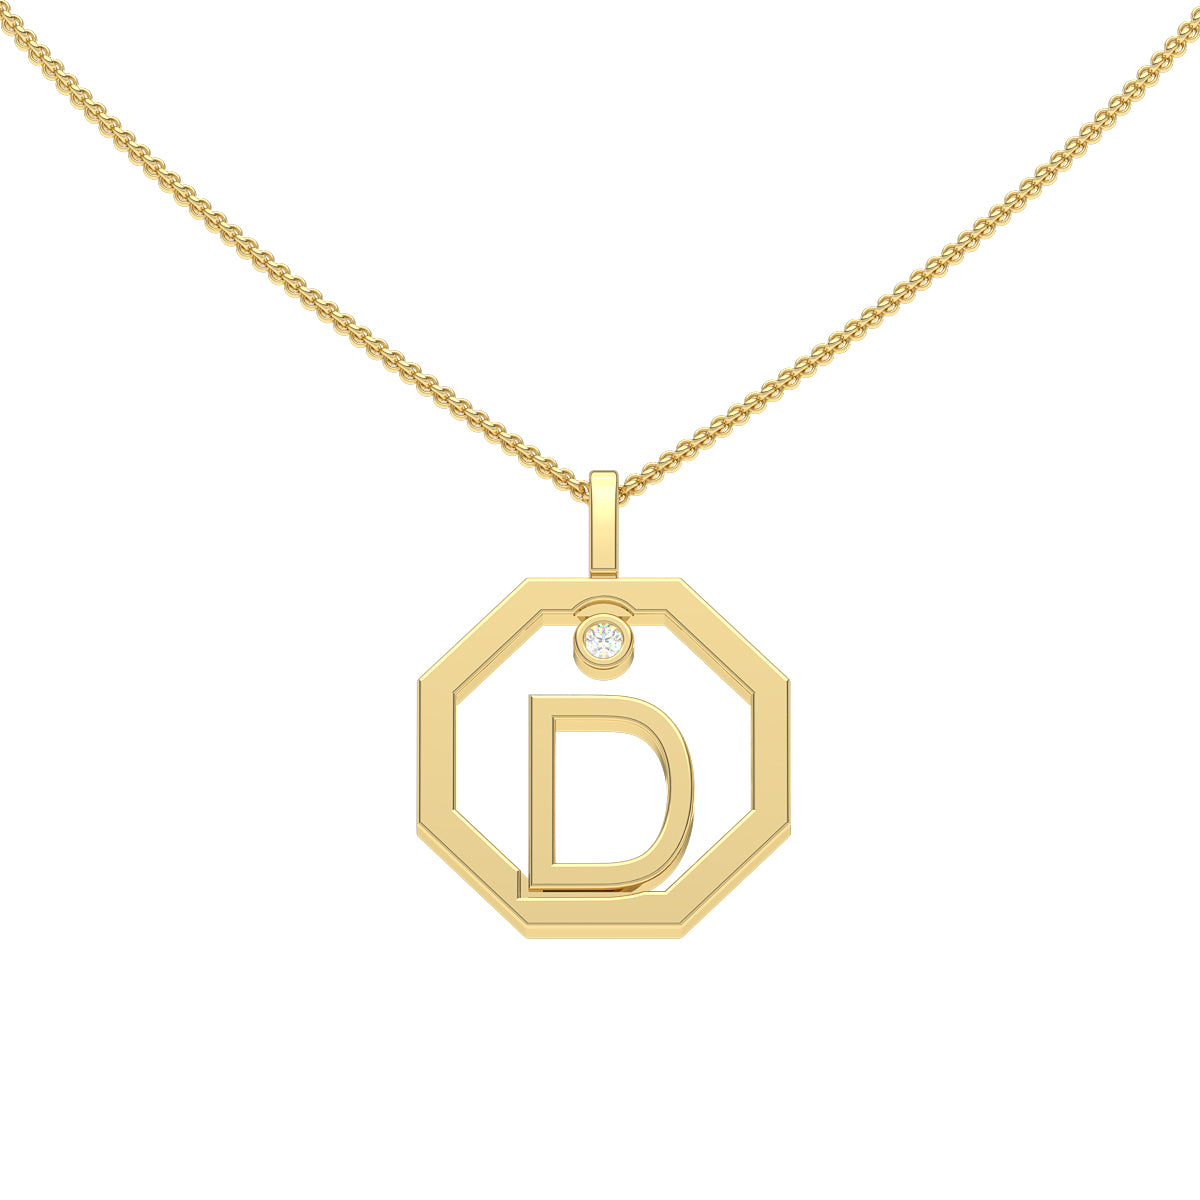 Personalised-Initial-D-diamond-yellow-gold-pendant-by-Sydney-jewellers-Lizunova